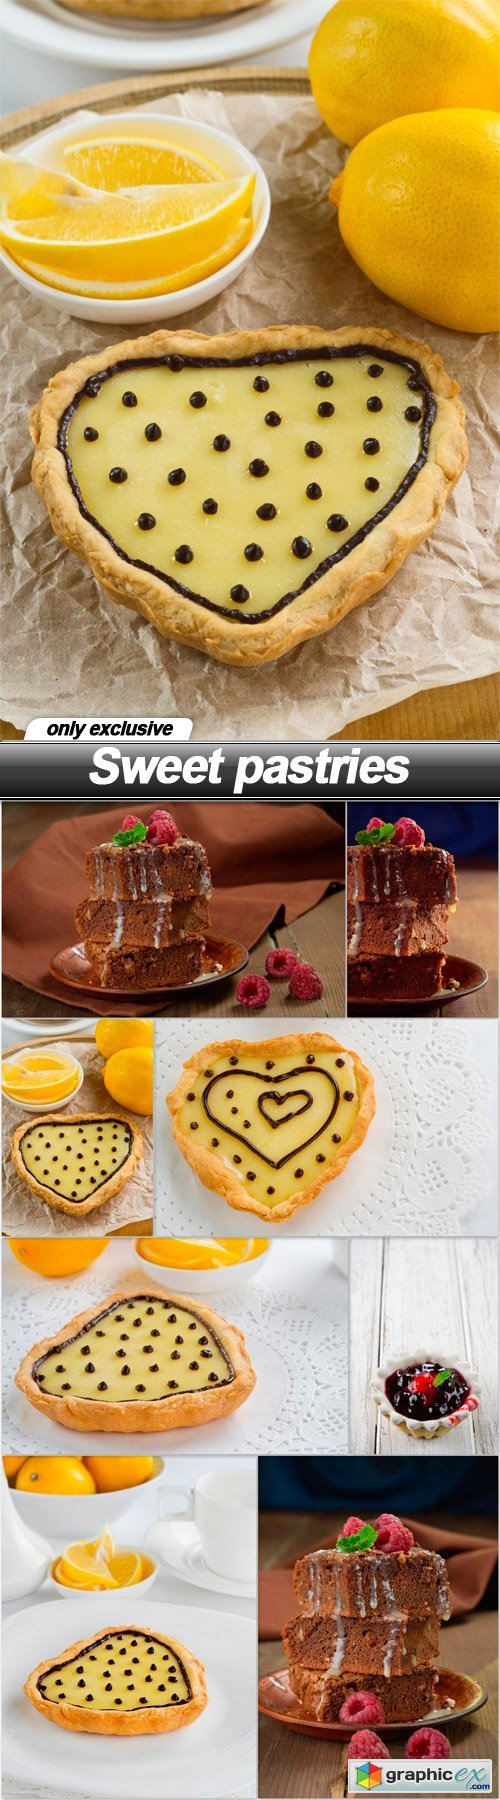 Sweet pastries - 8 UHQ JPEG